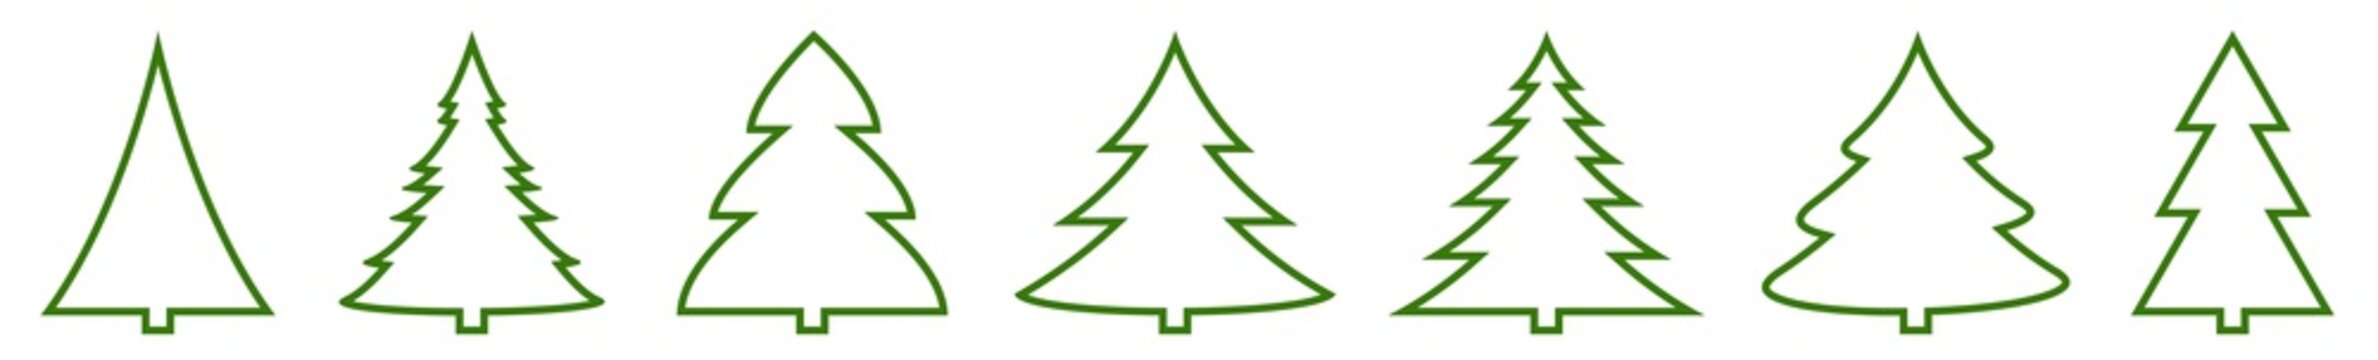 Christmas Tree Green Shape Icon | Fir Tree Illustration | x-mas Symbol | Logo | Isolated Variations